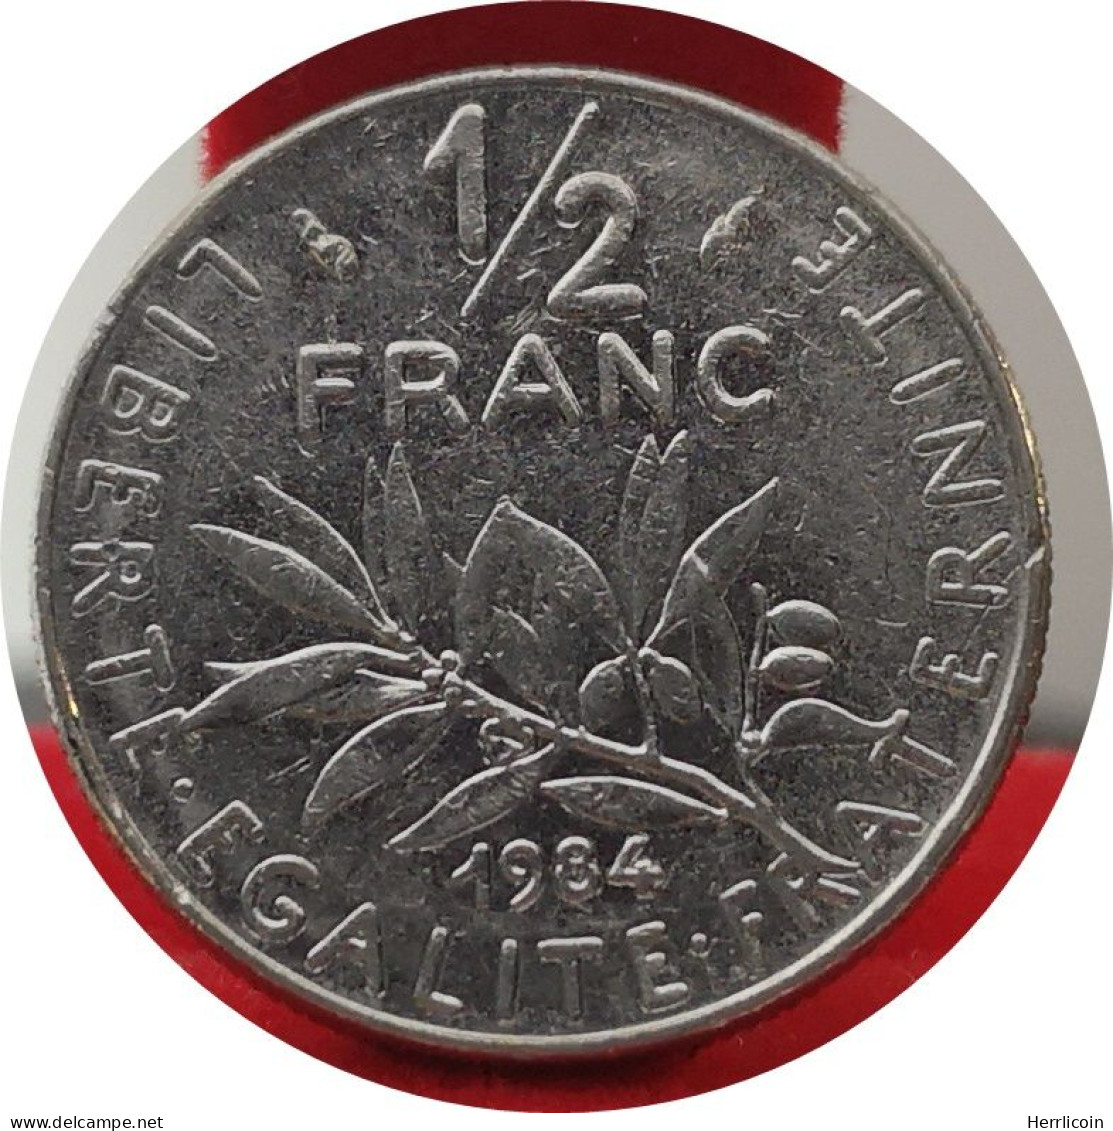 Monnaie France - 1964 - Demi Franc Semeuse O.Roty, Tranche Striée, Nickel - 1/2 Franc